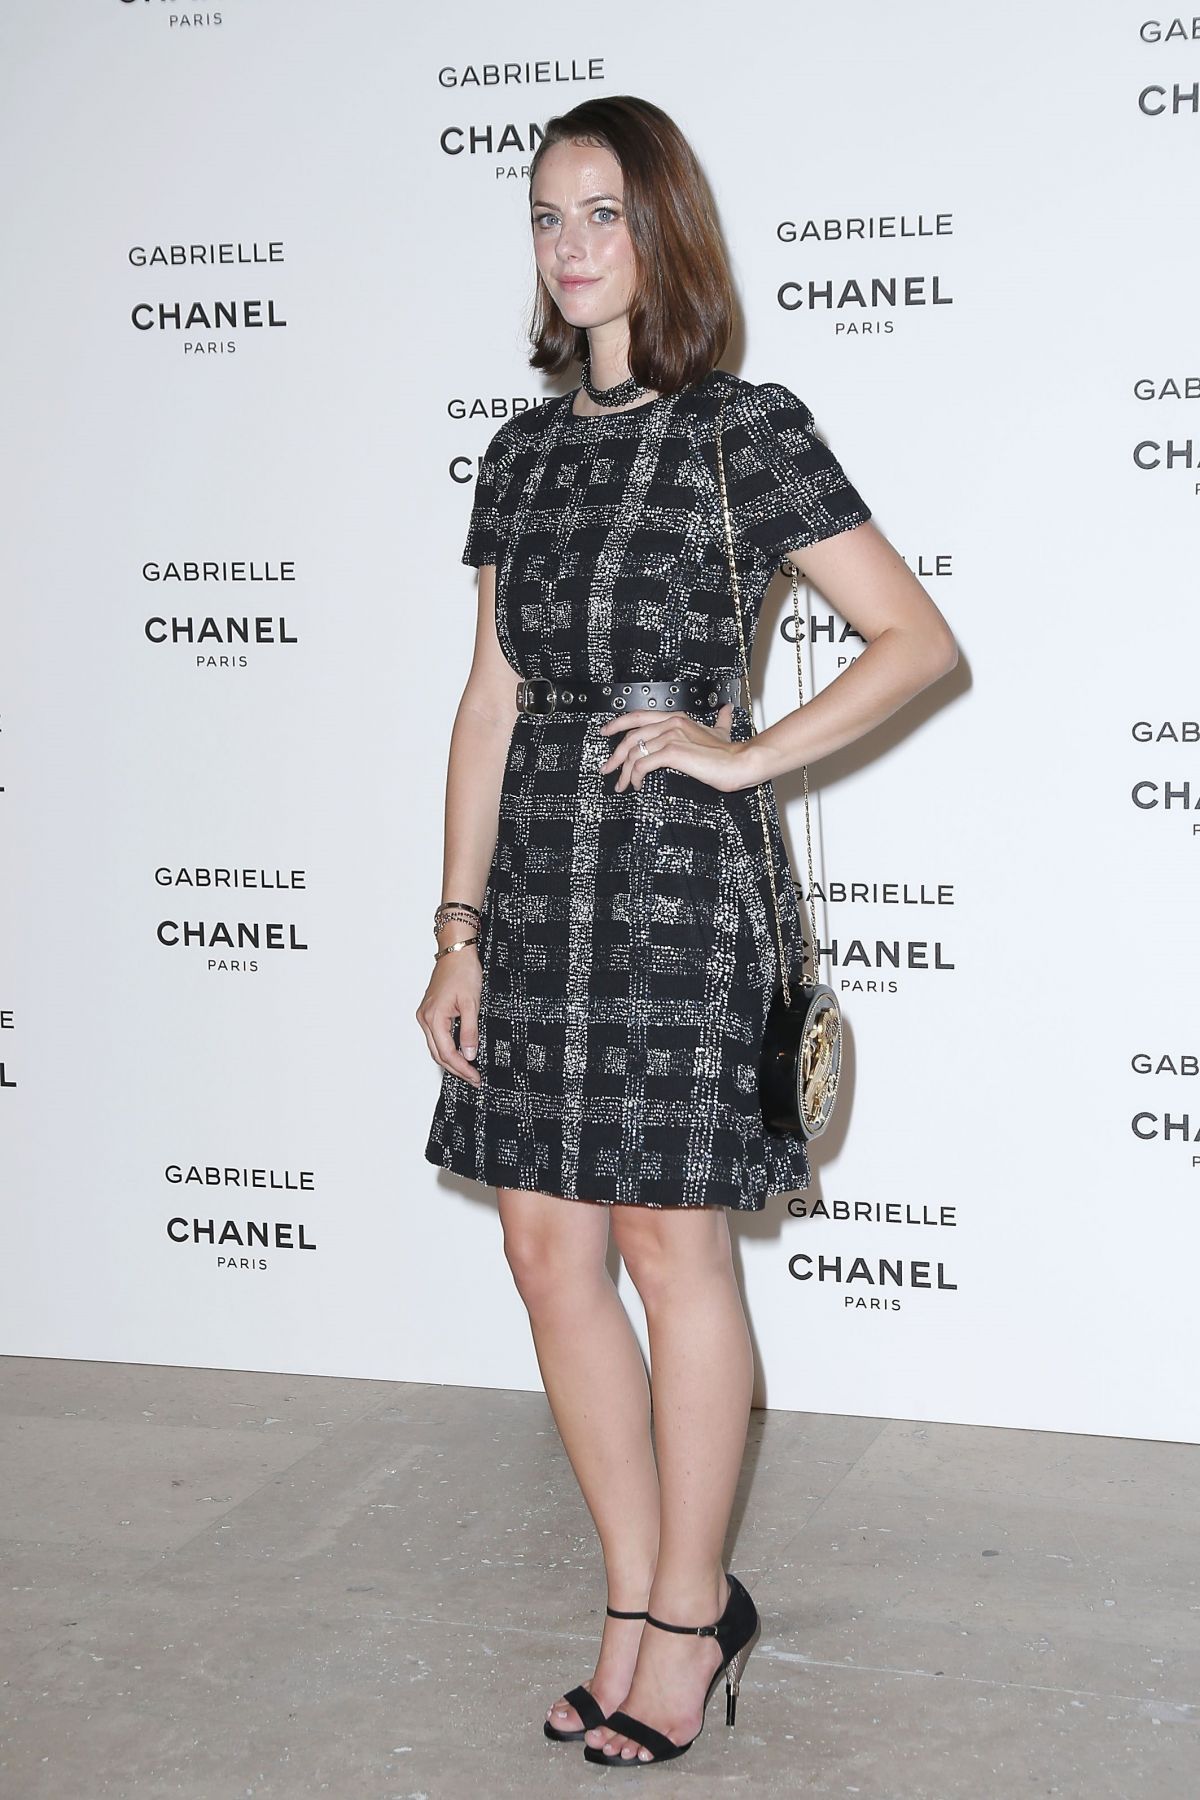 KAYA SCODELARIO at Chanel Gabrielle Perfume Launch Party n Paris 07/04 ...